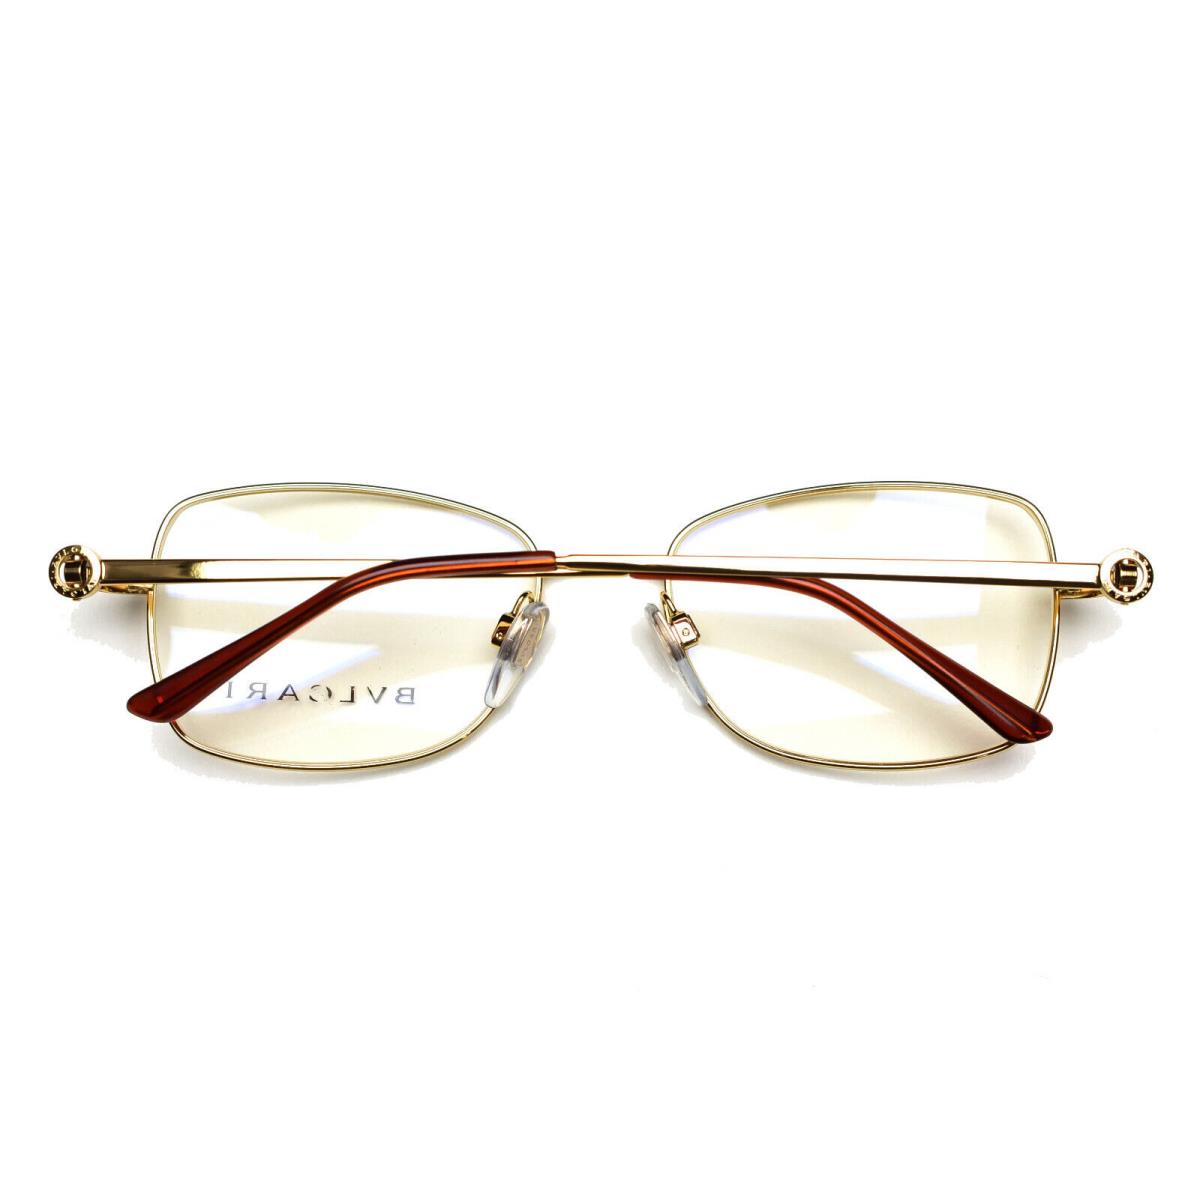 Bvlgari Eyeglasses Frame Gold 237 101 51-17-130 Without Case